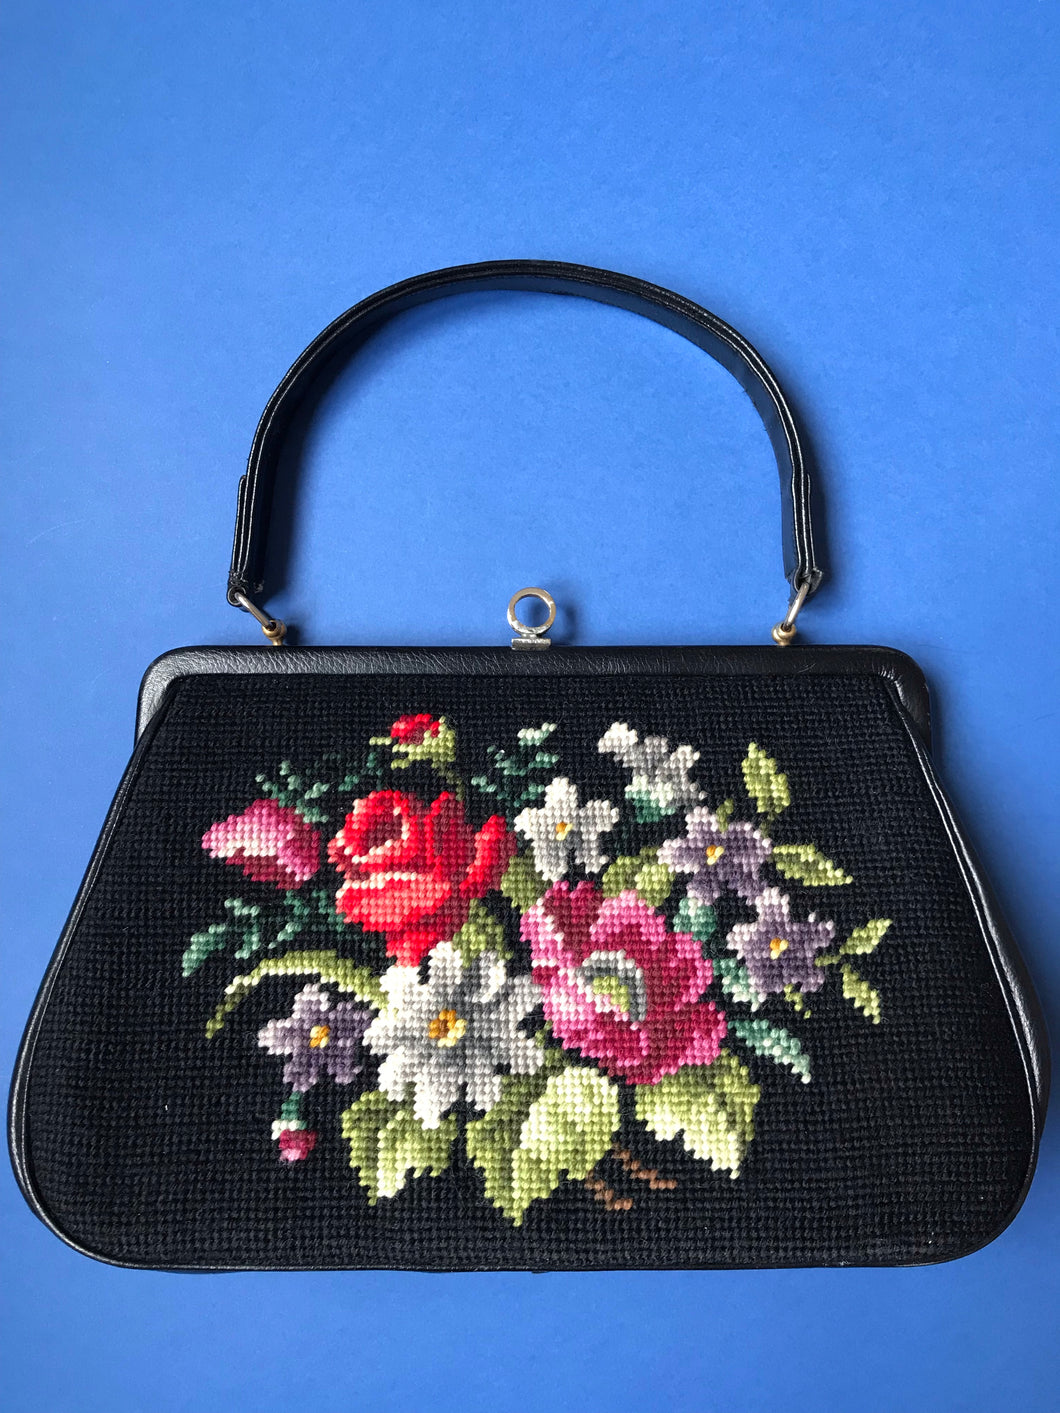 Gorgeous Embroidered Leather Handbag